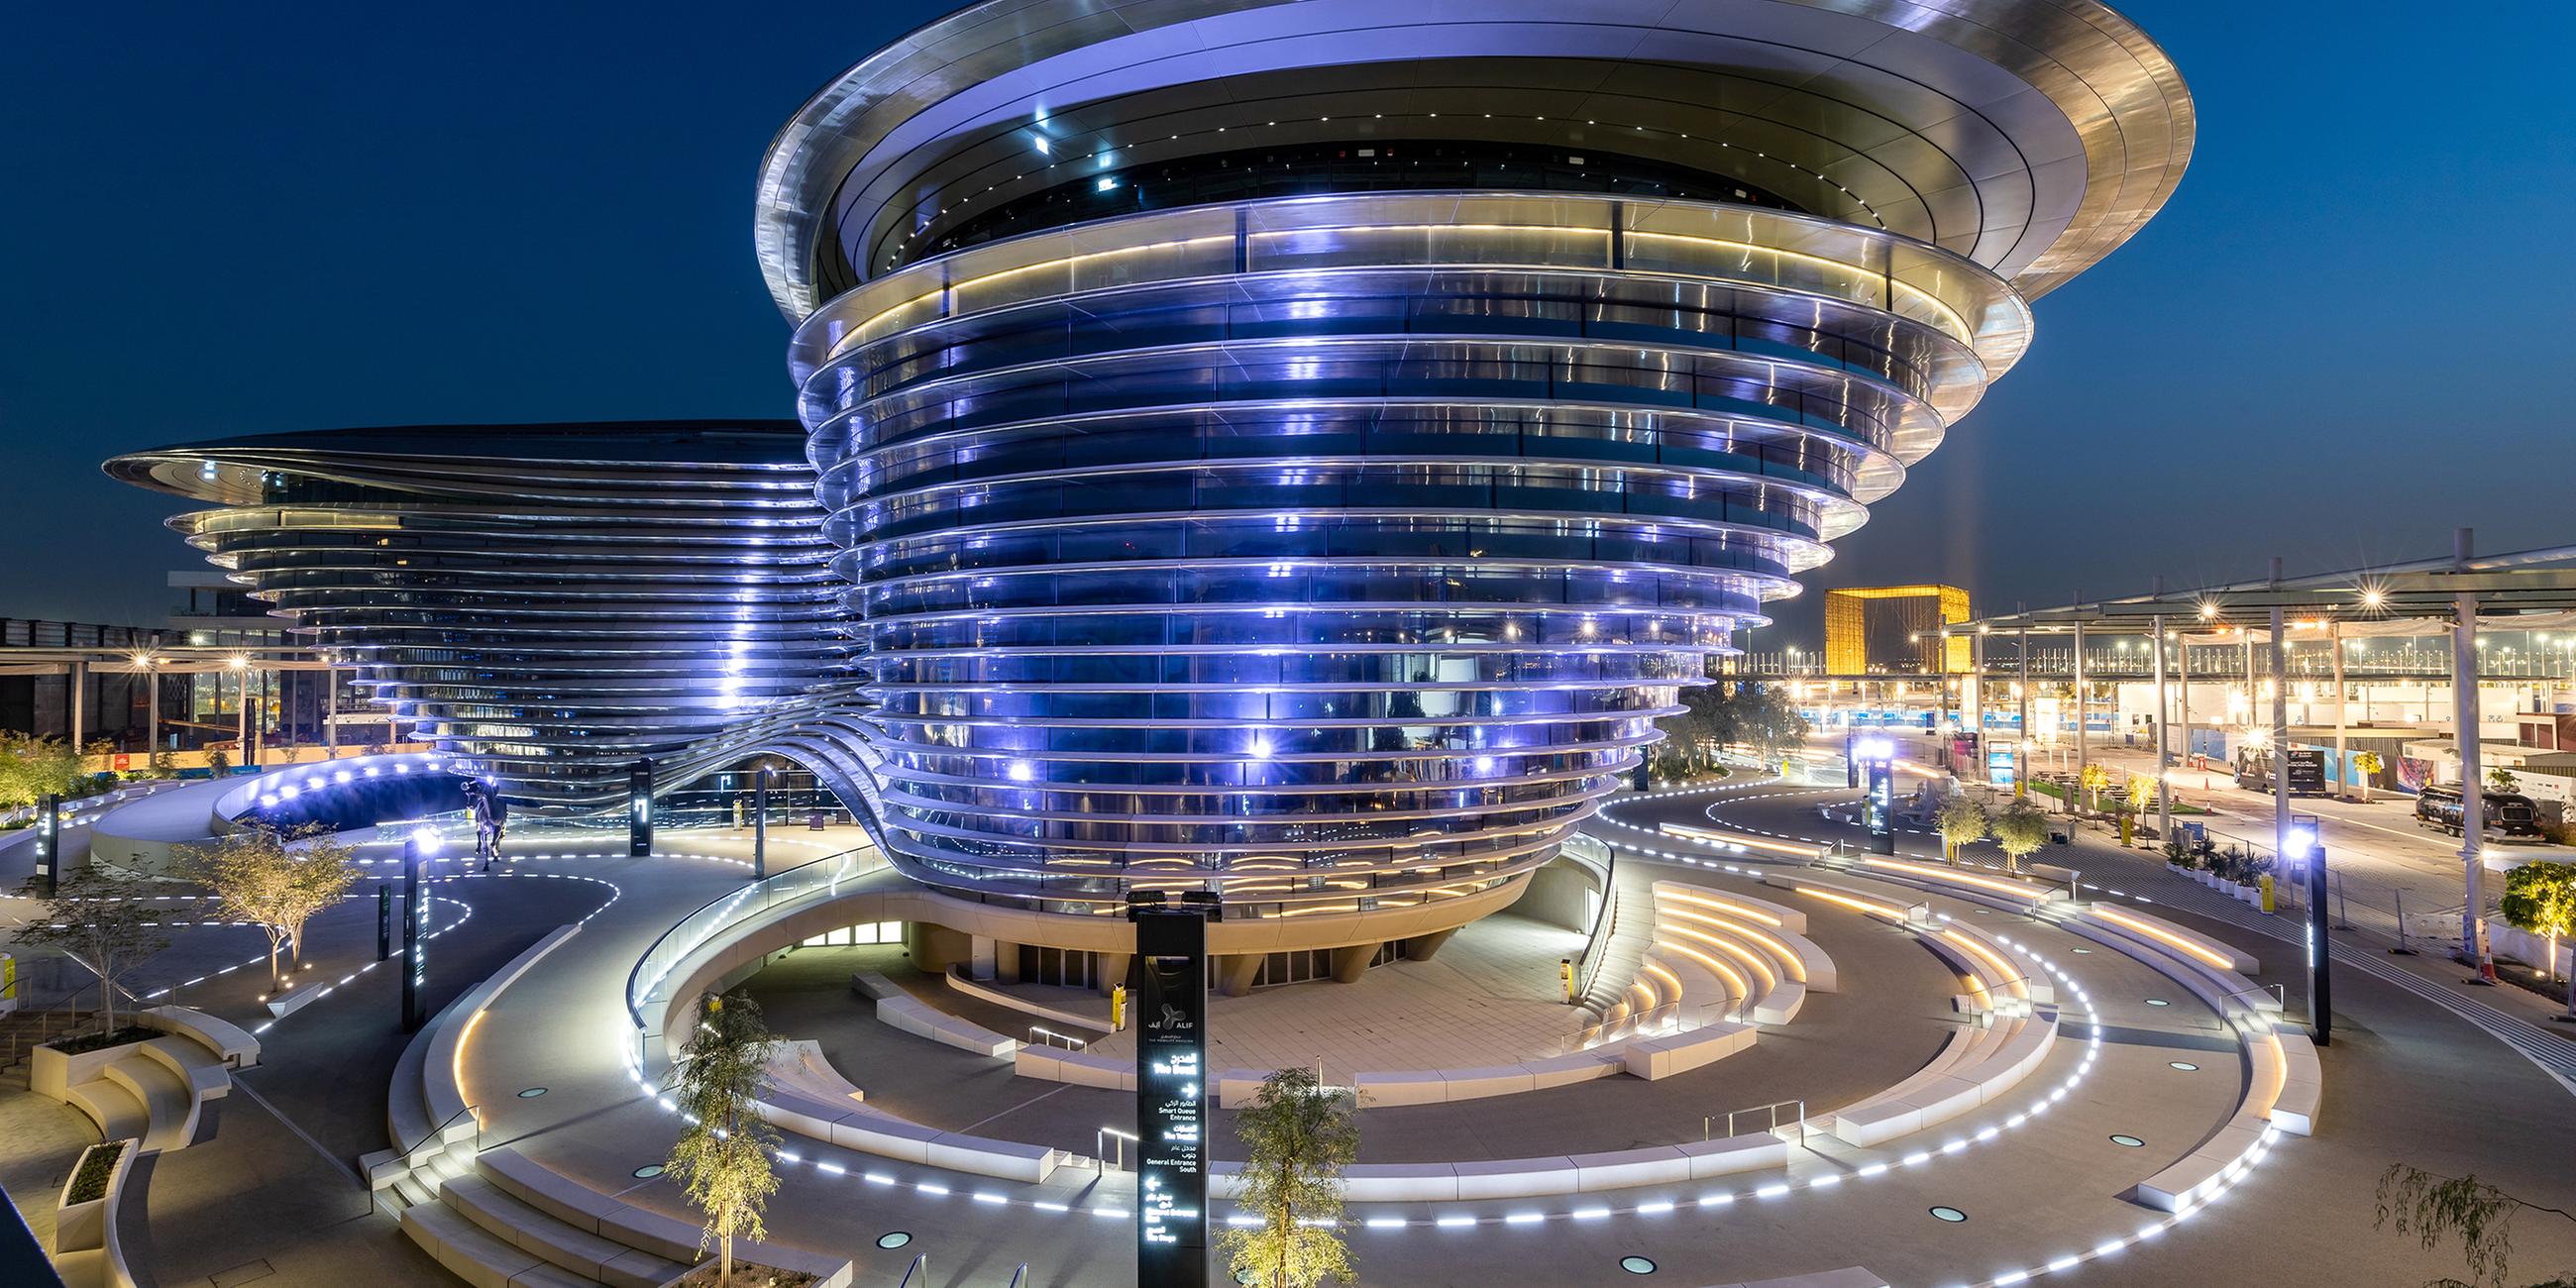 The Mobility Pavillion auf der Expo 2020 in Dubai